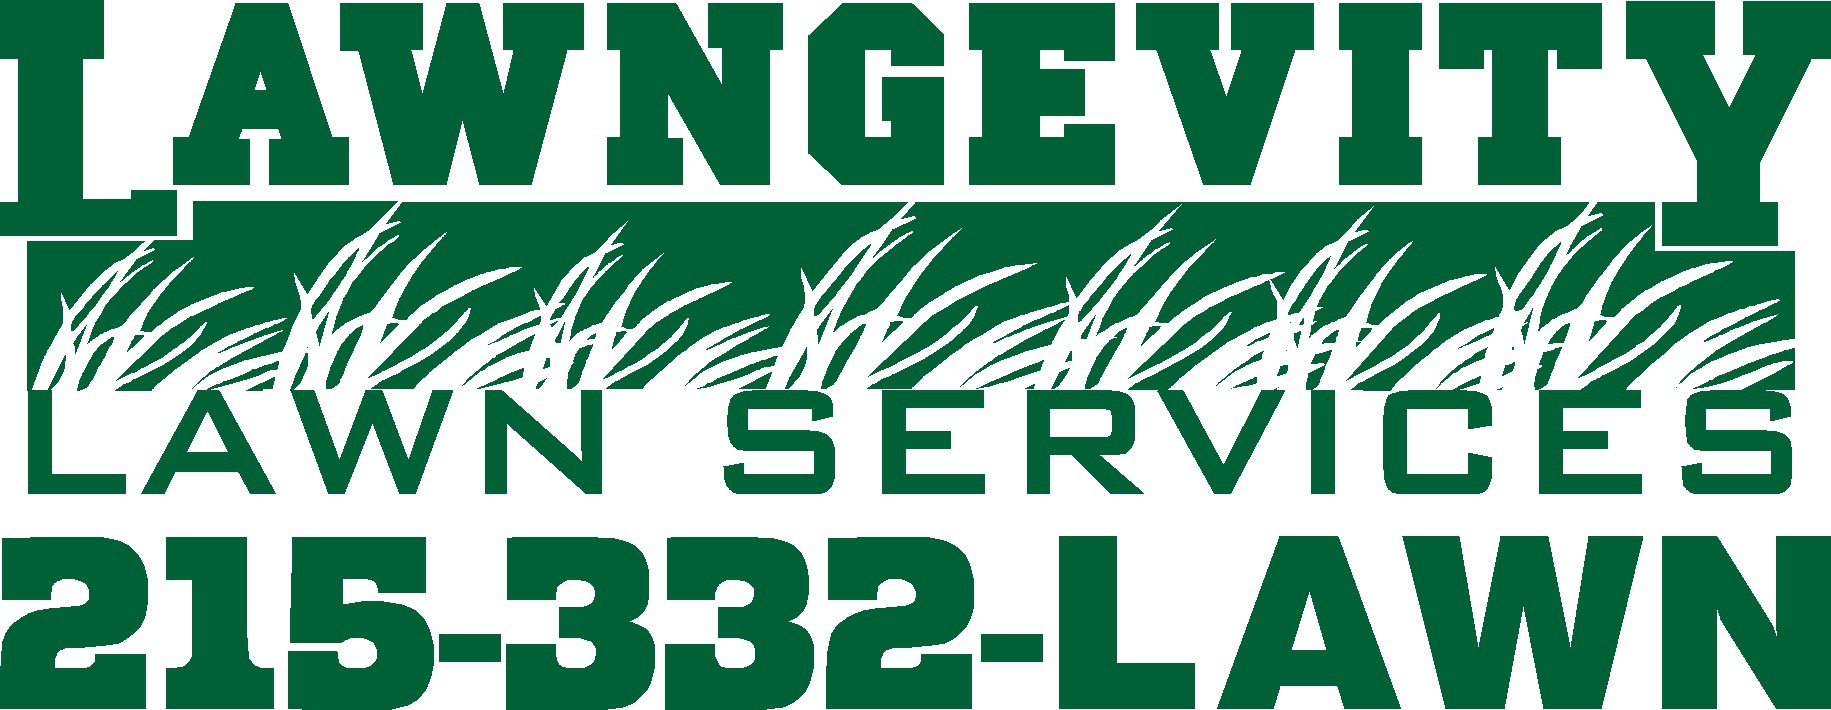 Lawngevity lawn care Inc.